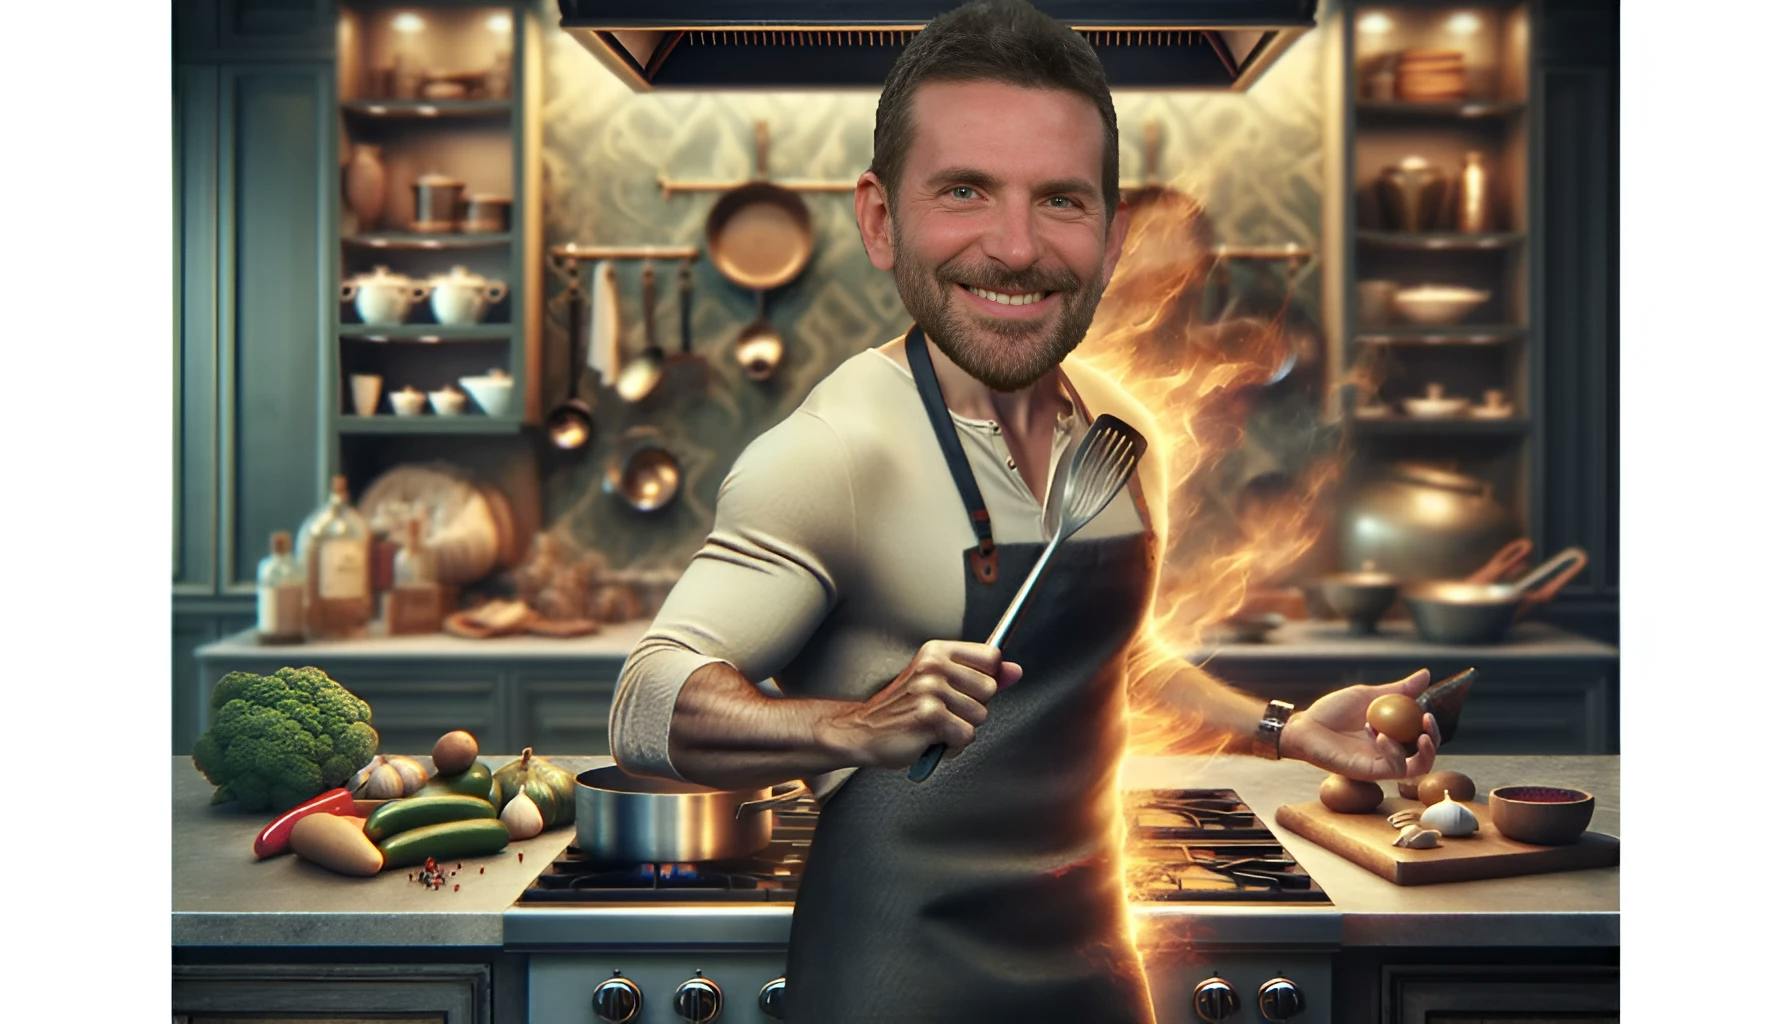 bradley-cooper-passionate-cooking-kitchen.webp